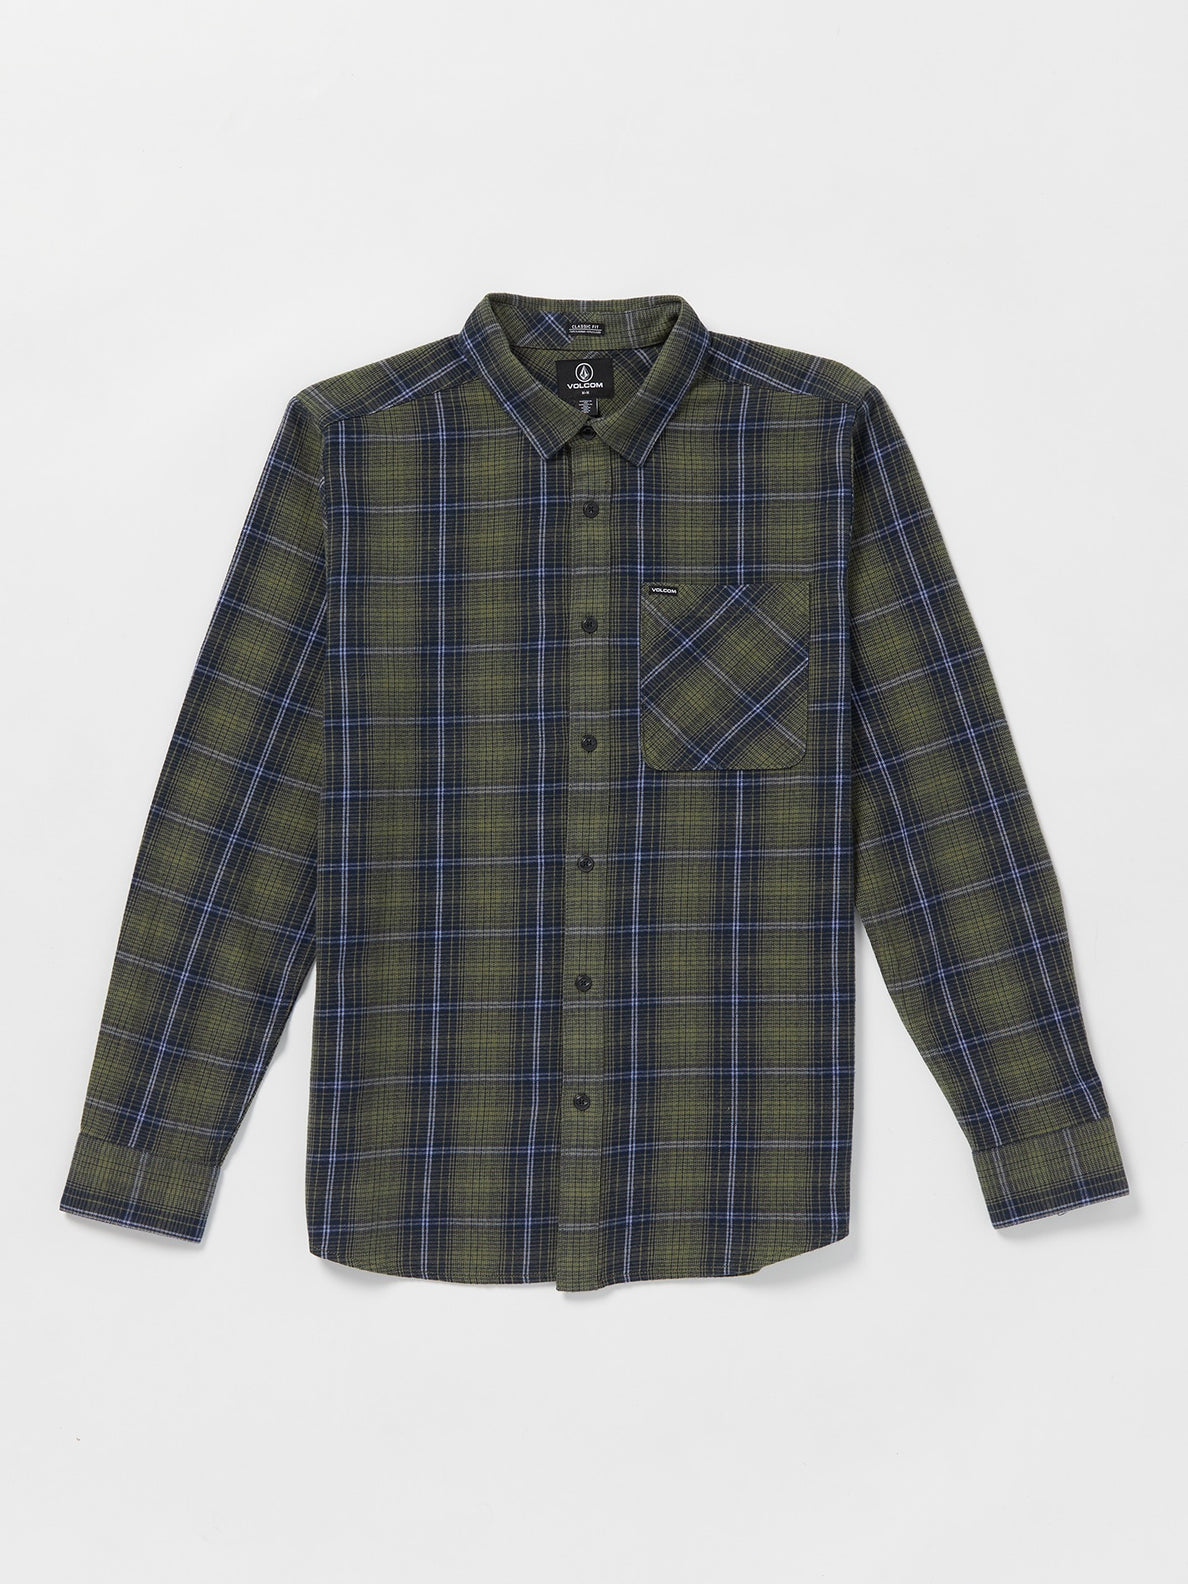 Heavy Twills Flannel Long Sleeve Shirt - Old Mill